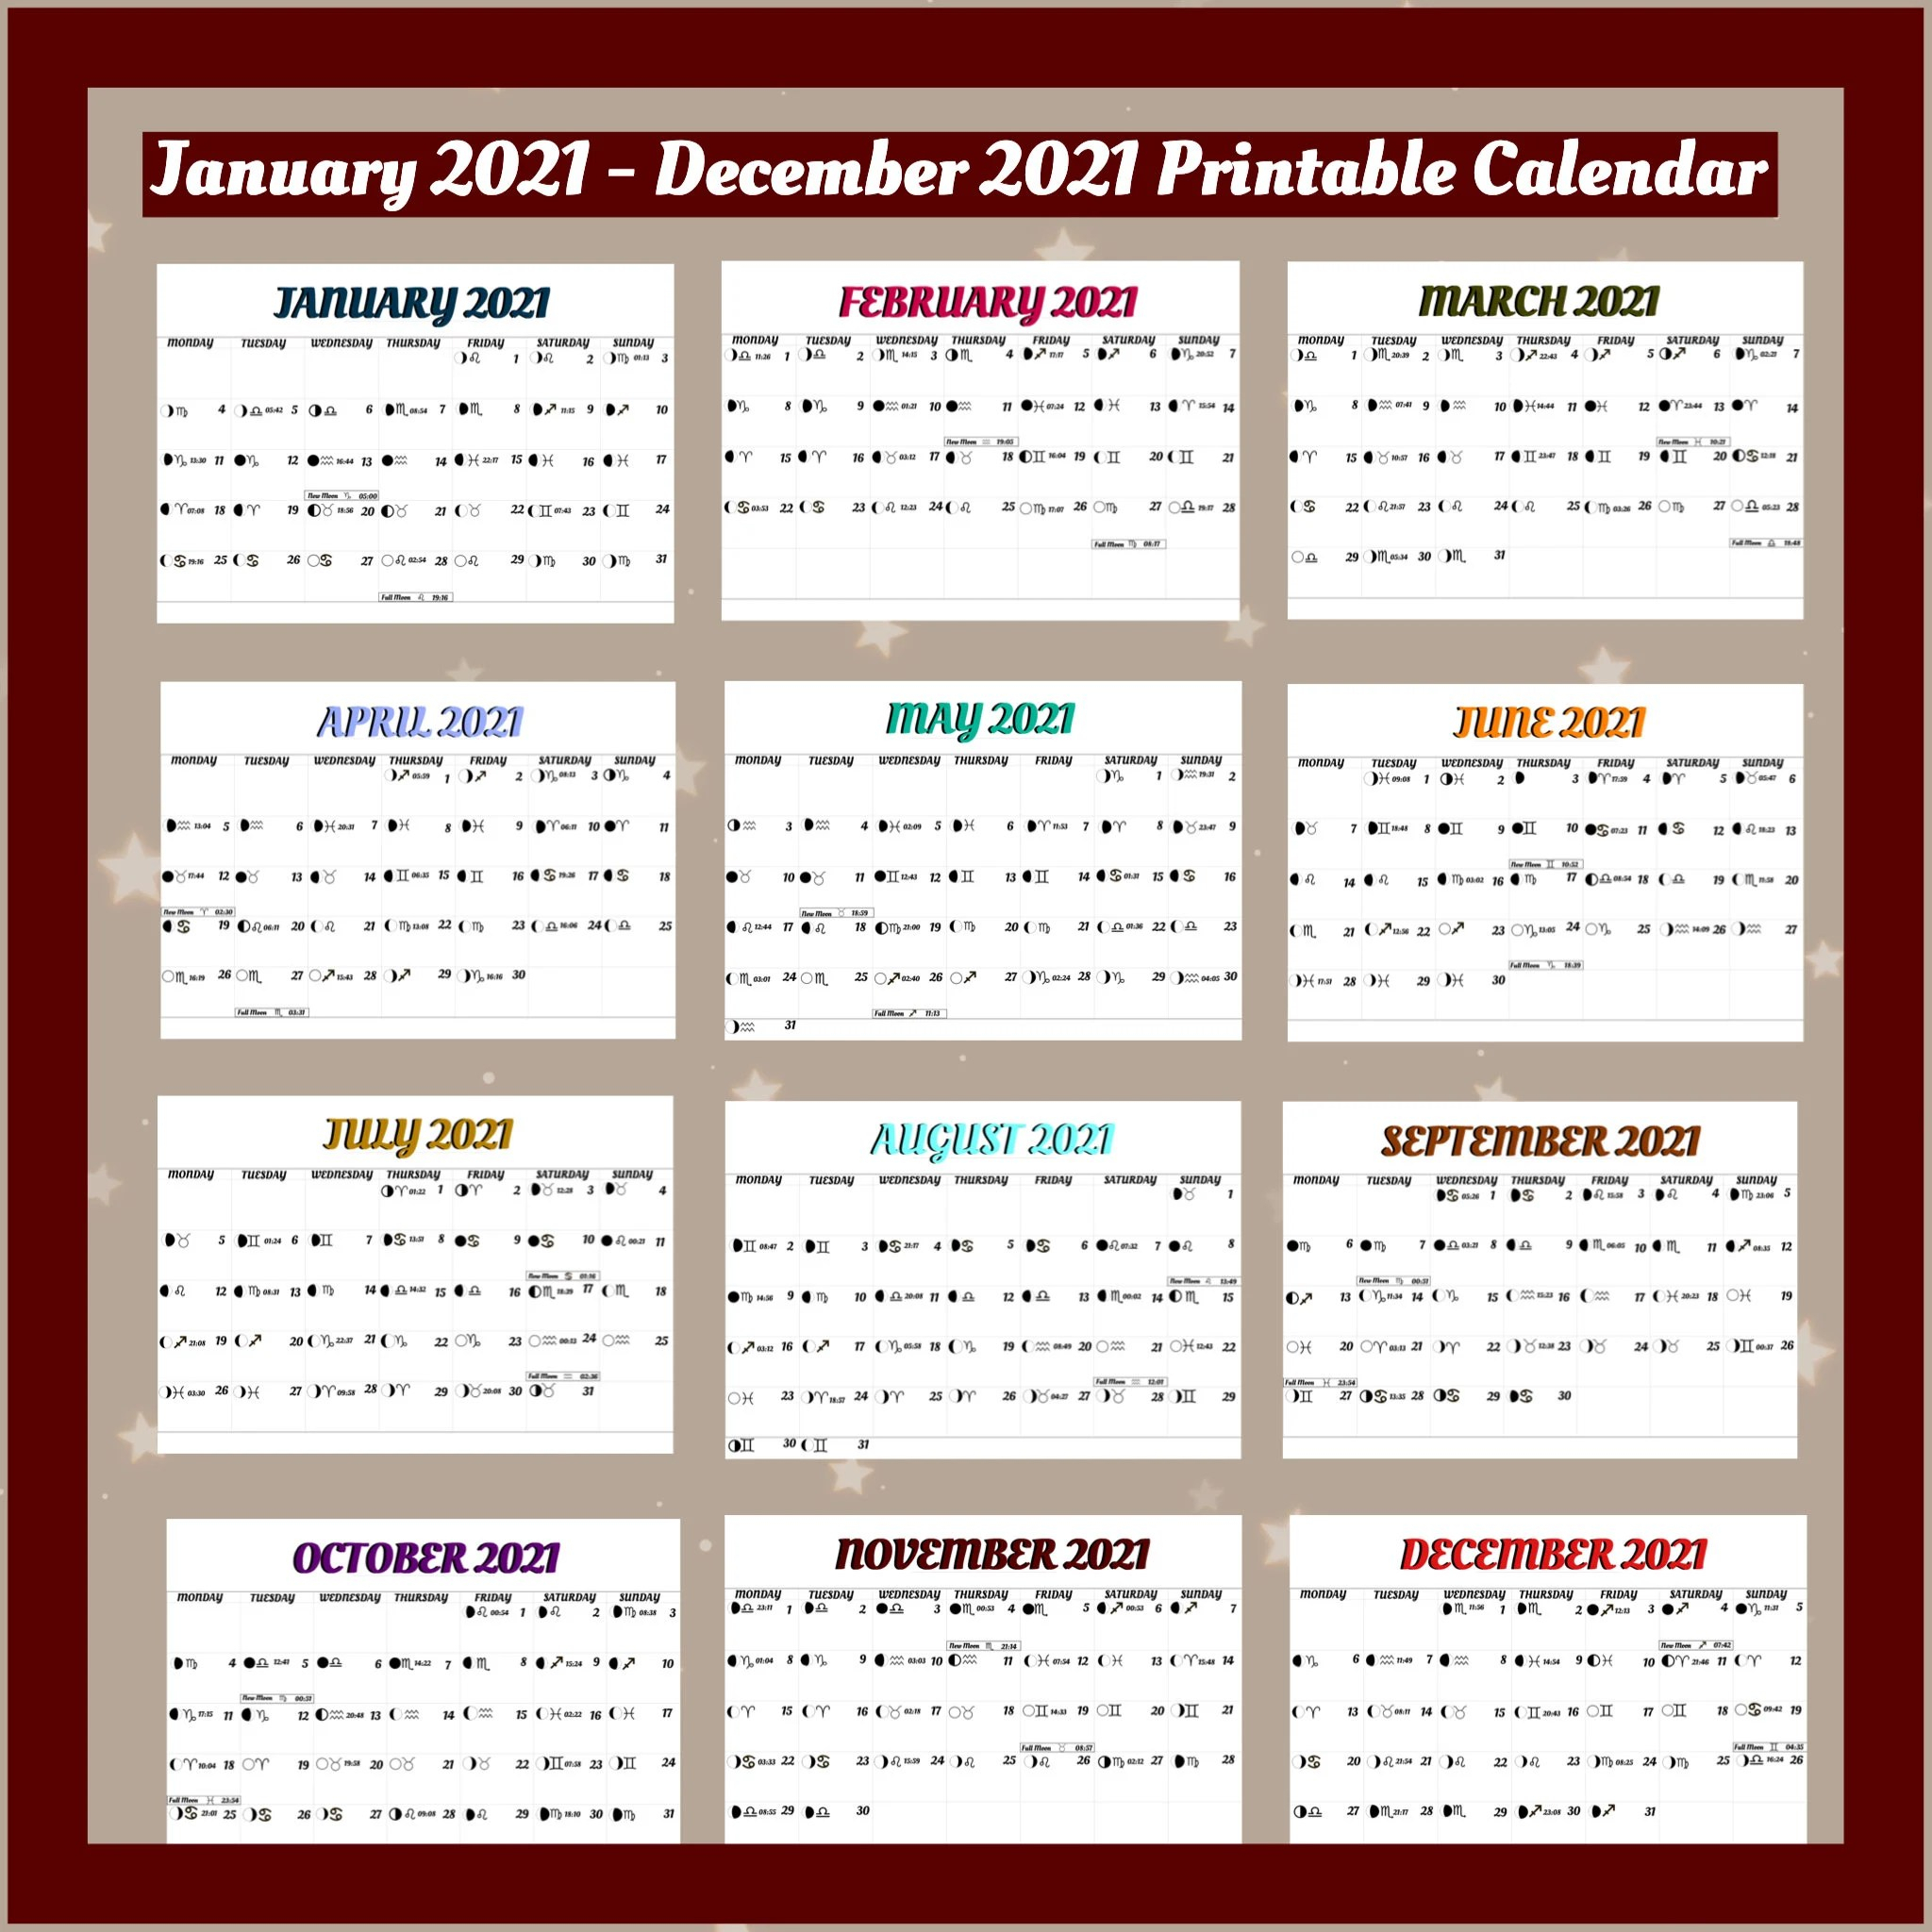 Lunar Calendar 2022 Free Printable  Latest News Update throughout Lunar Calendar 2022 Printable